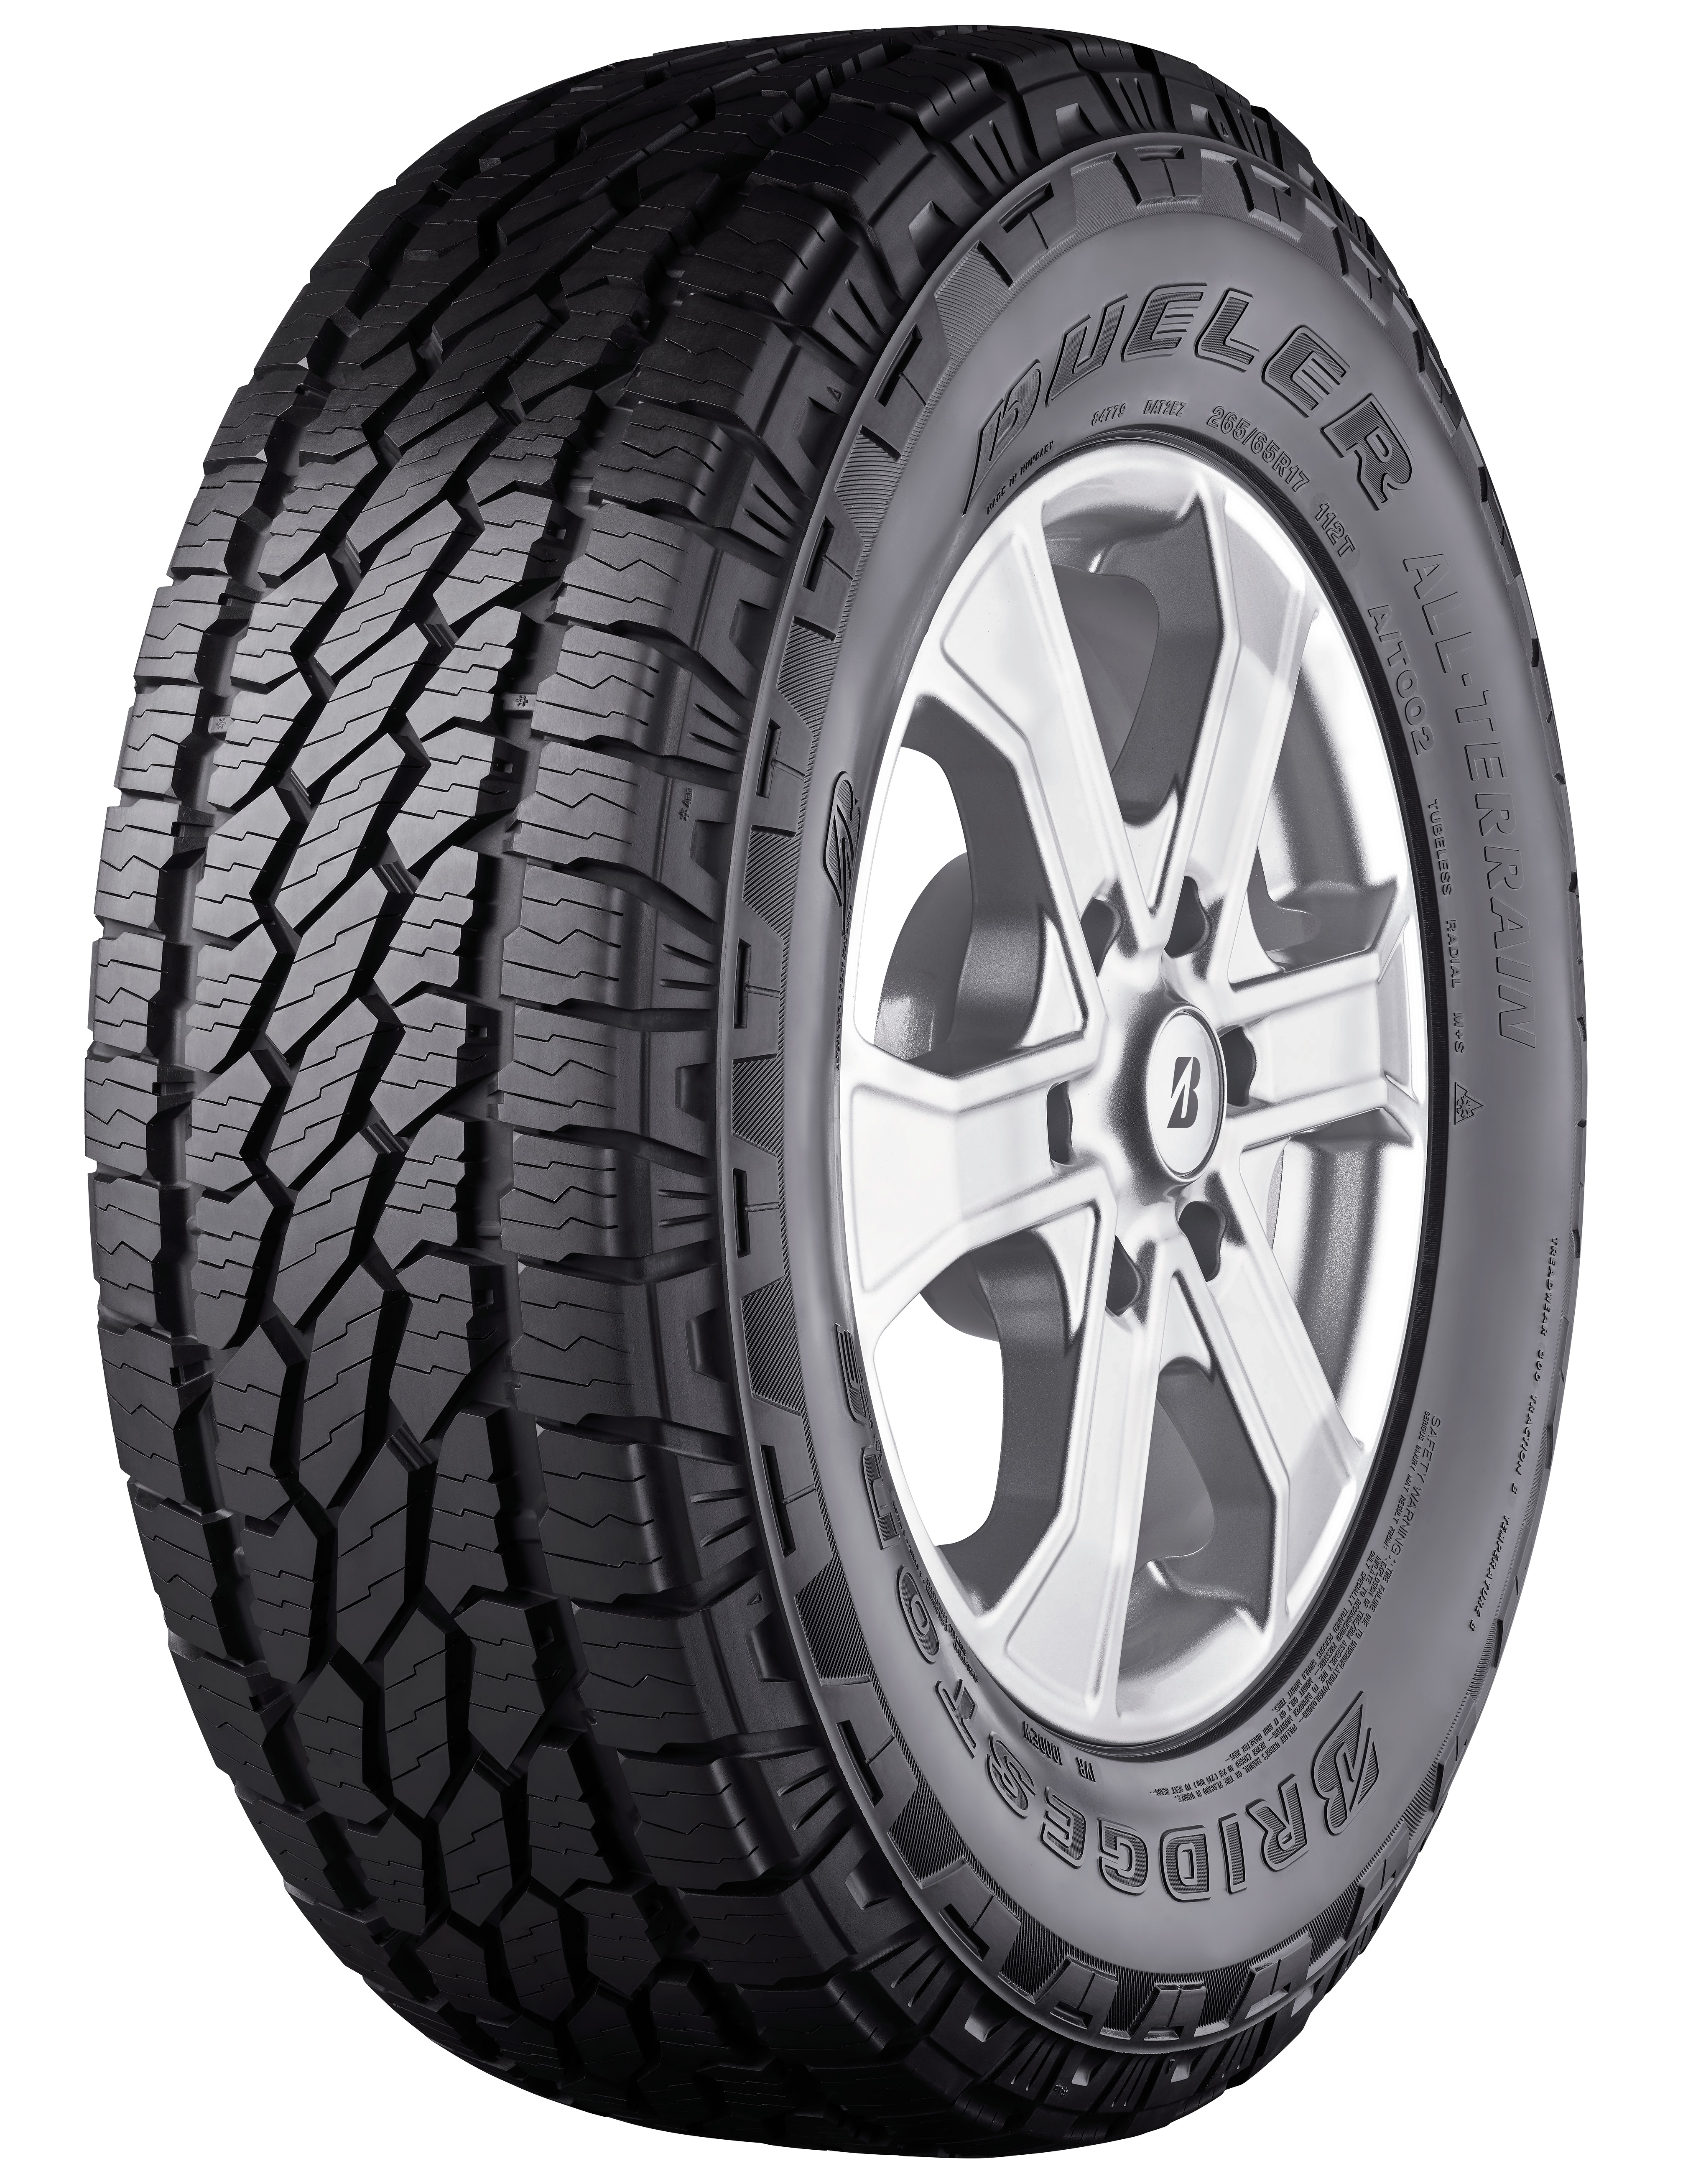 Bridgestone Dueler All Terrain AT002 - Tyre Reviews and Tests